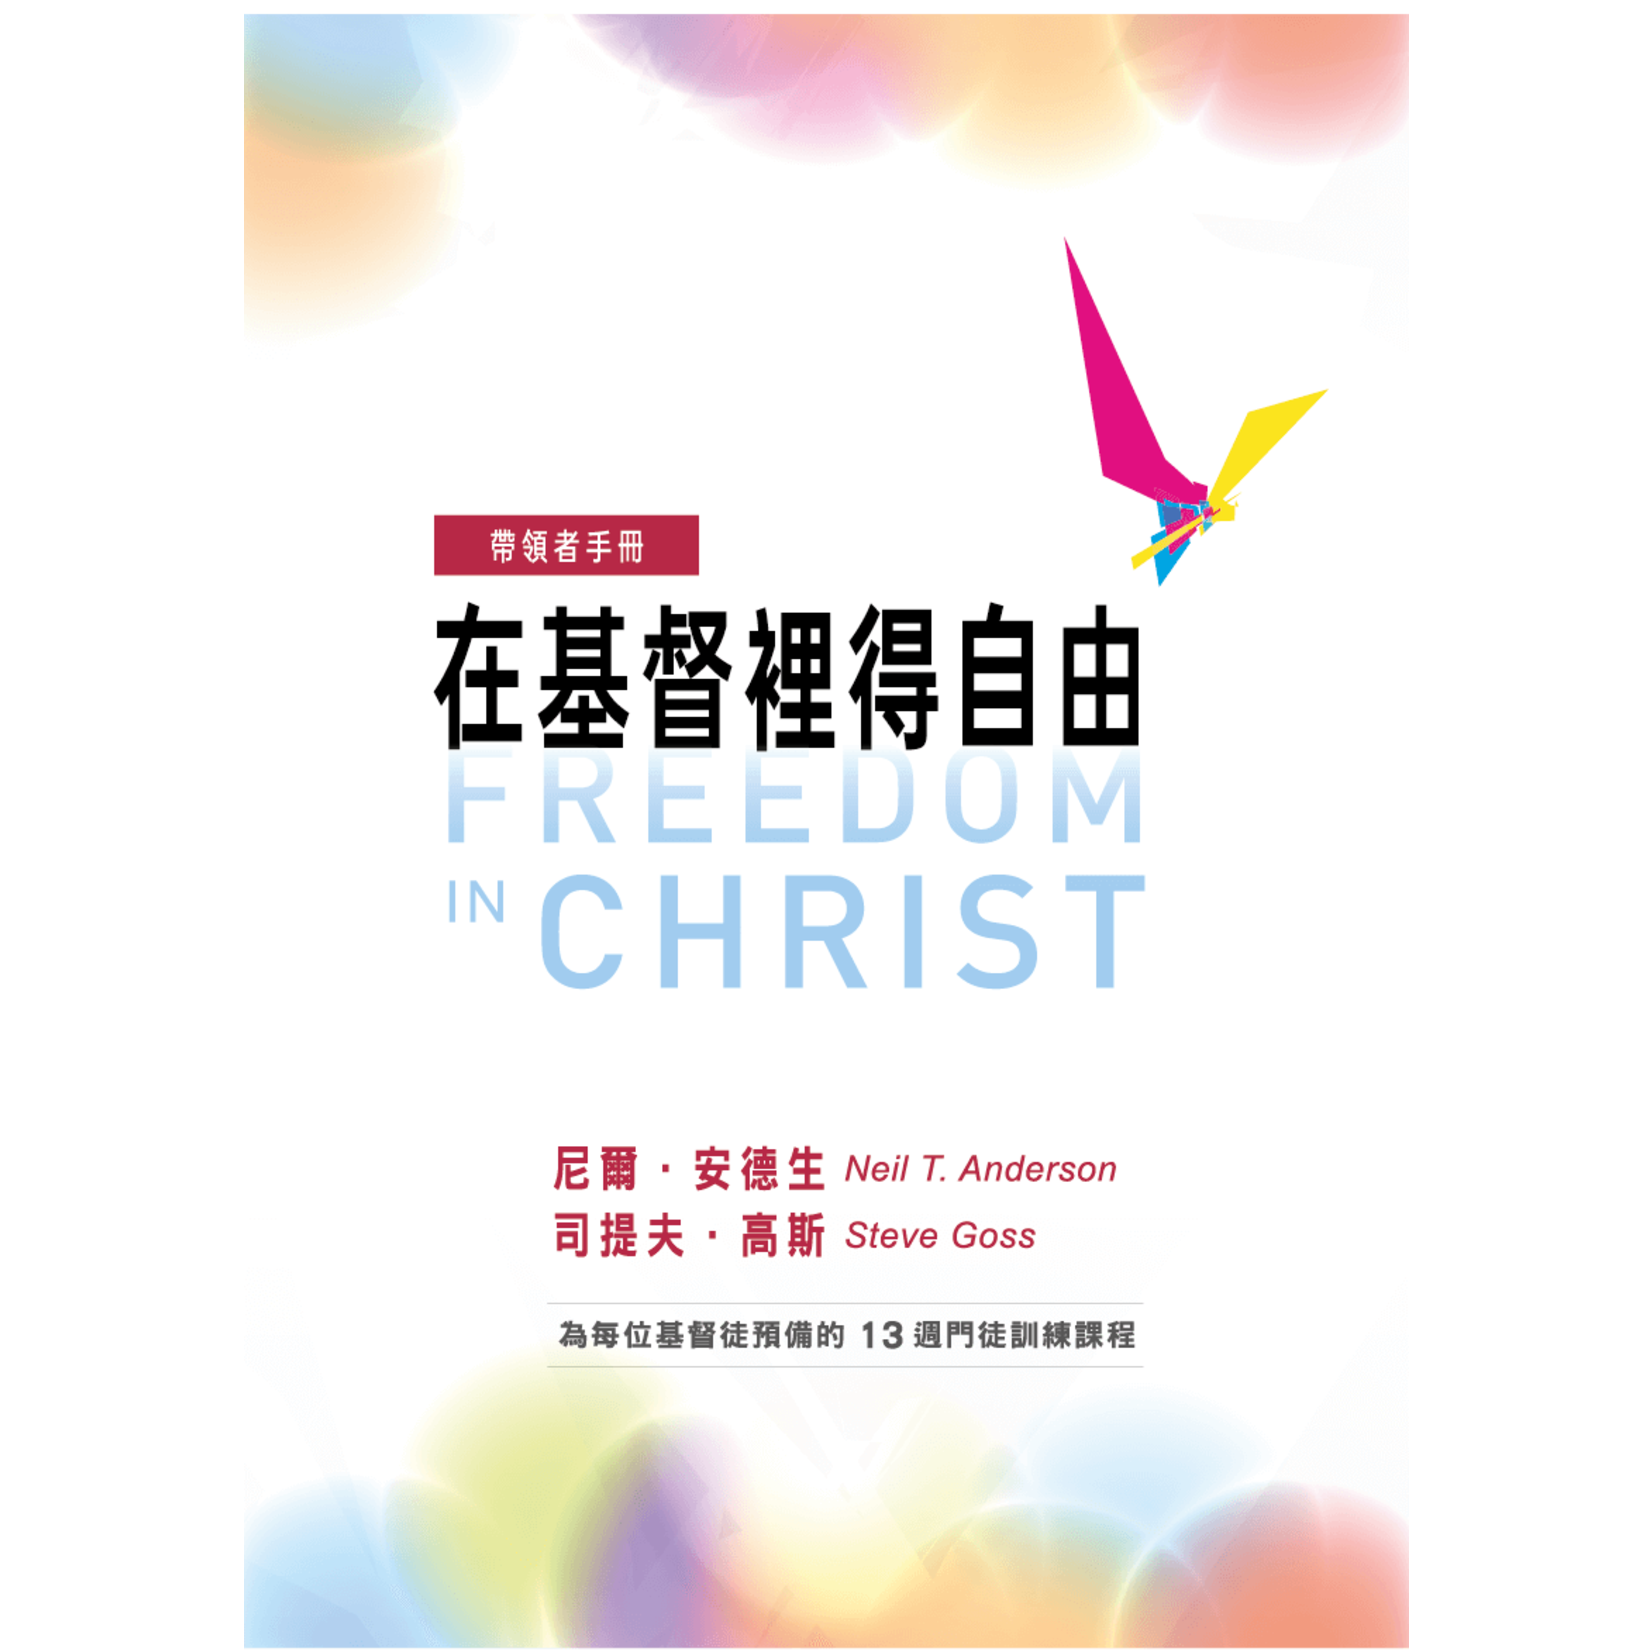 中國學園傳道會 Taiwan Campus Crusade for Christ 在基督裡得自由：帶領者手冊（含教學影片、投影片） | Freedom in Christ-Leader’s Guide